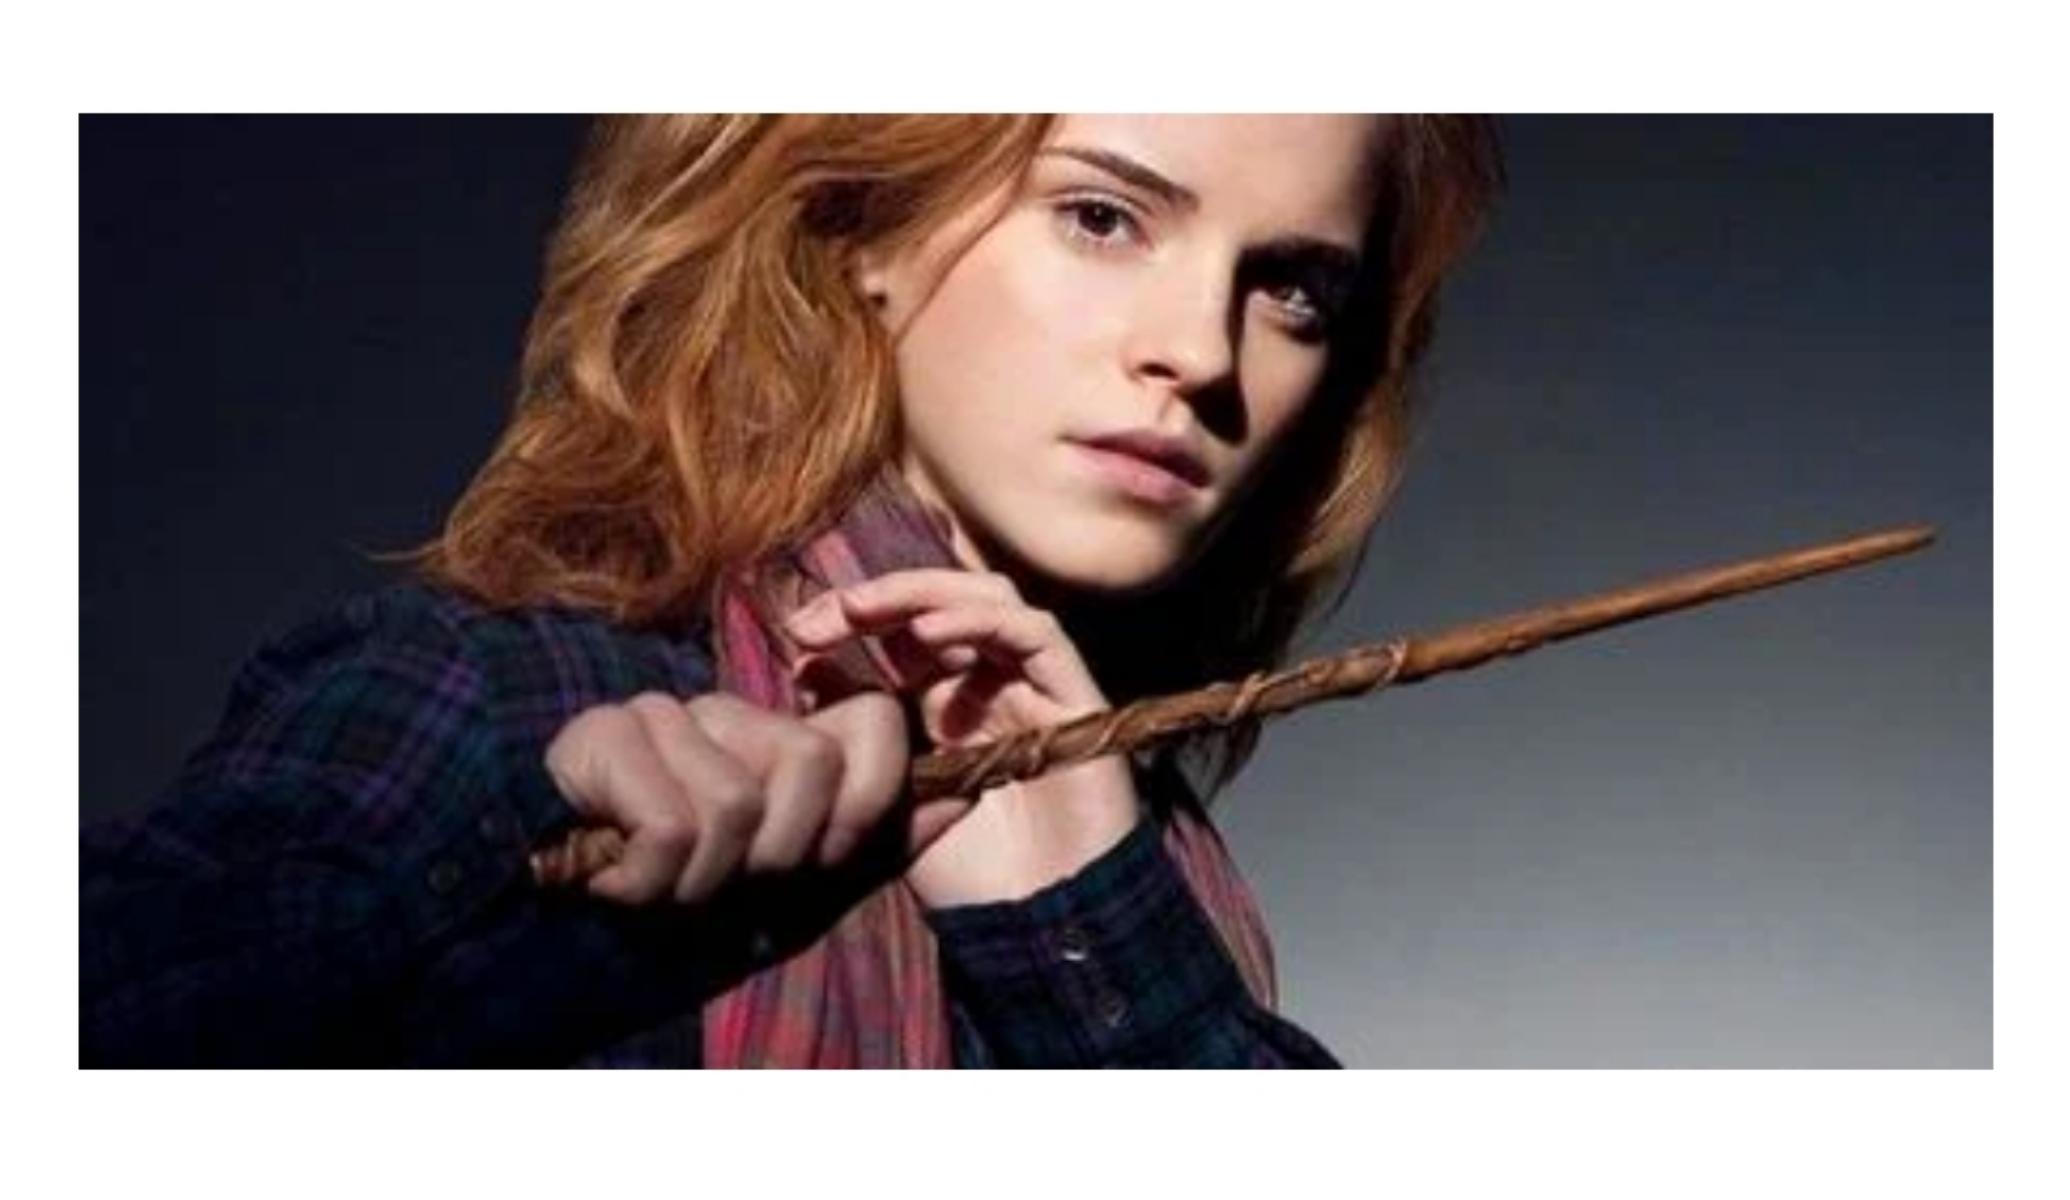 6.Hermione Granger Has Exceptional Talent